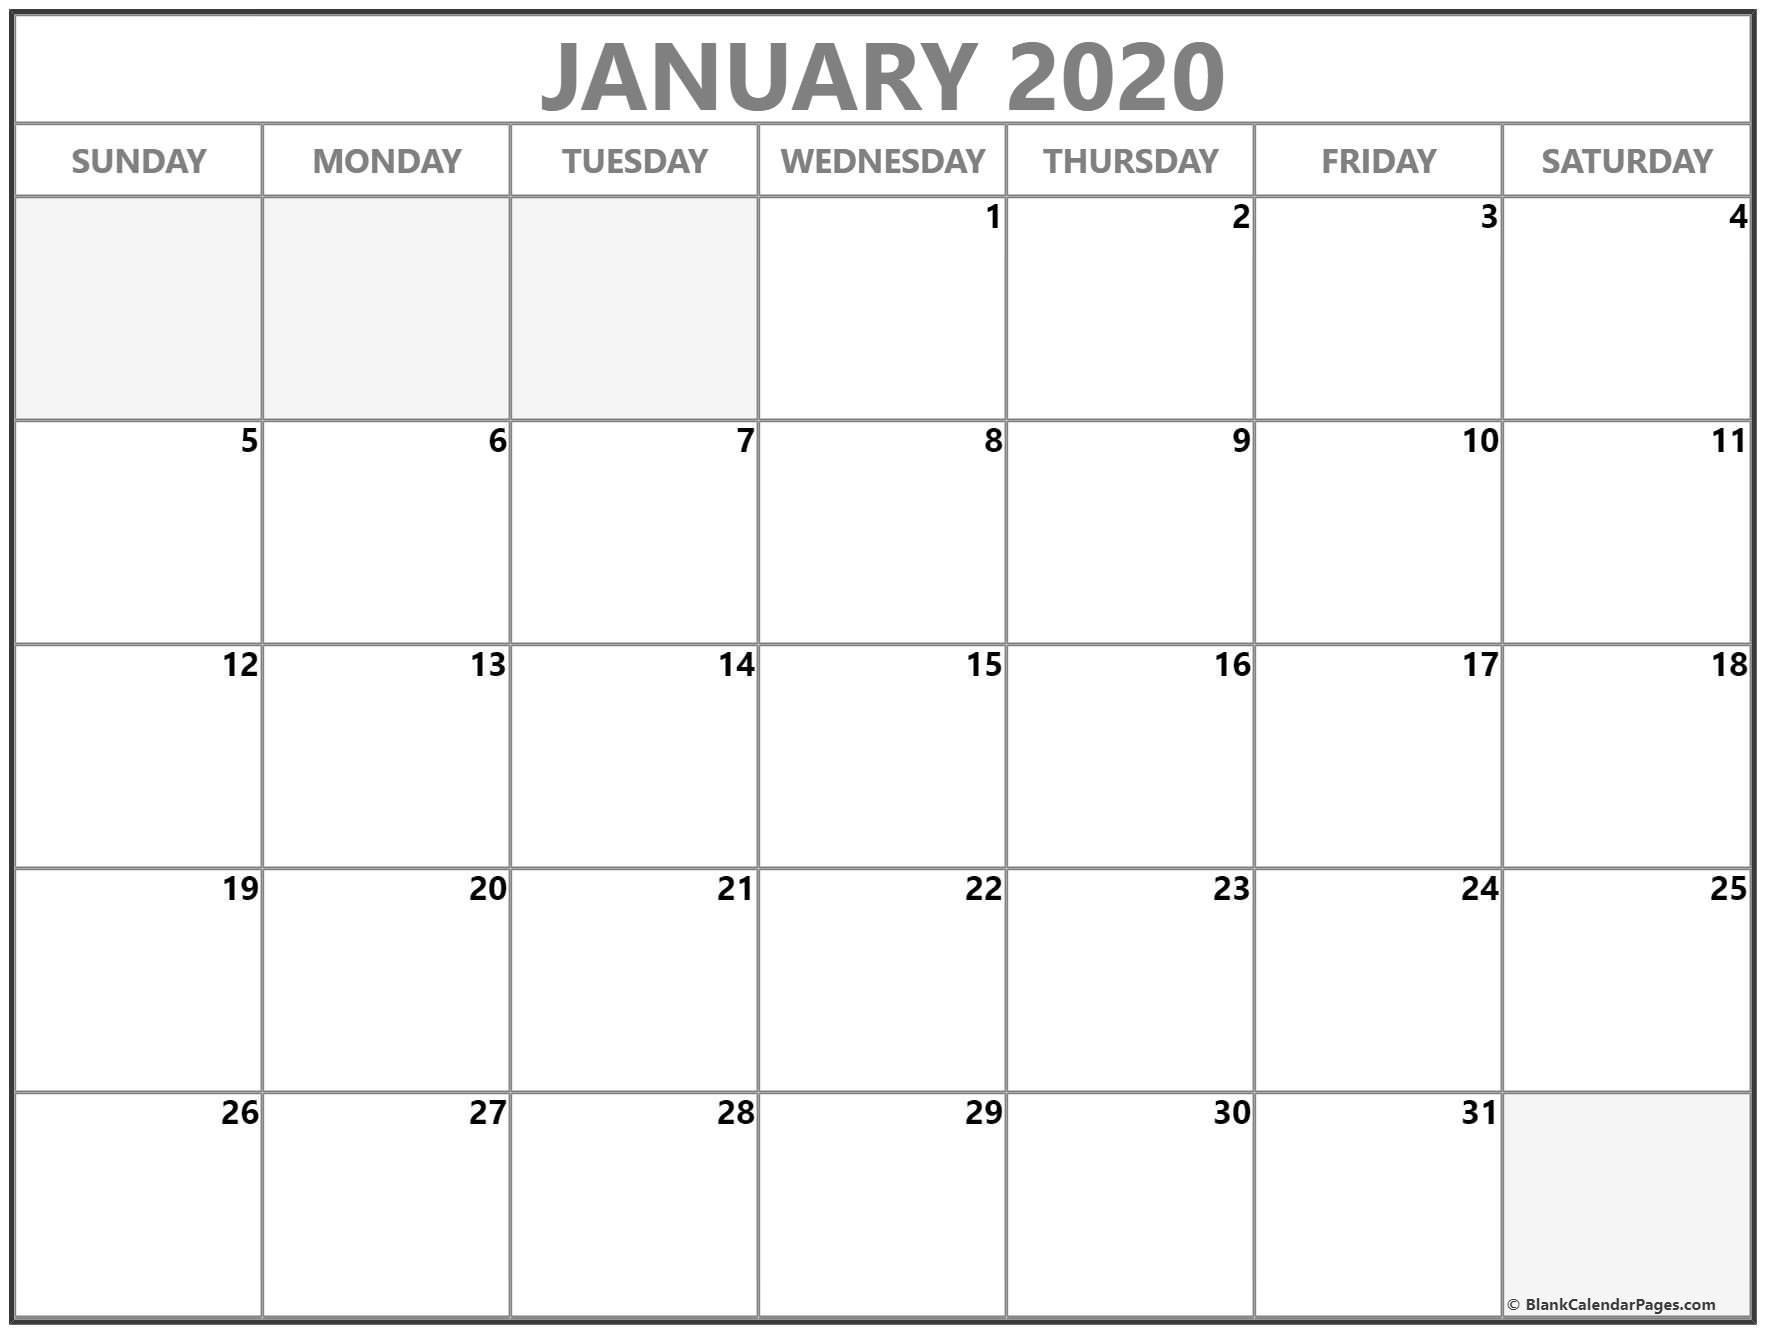 January 2020 Calendar | Free Printable Monthly Calendars-January 2020 Calendar Imom